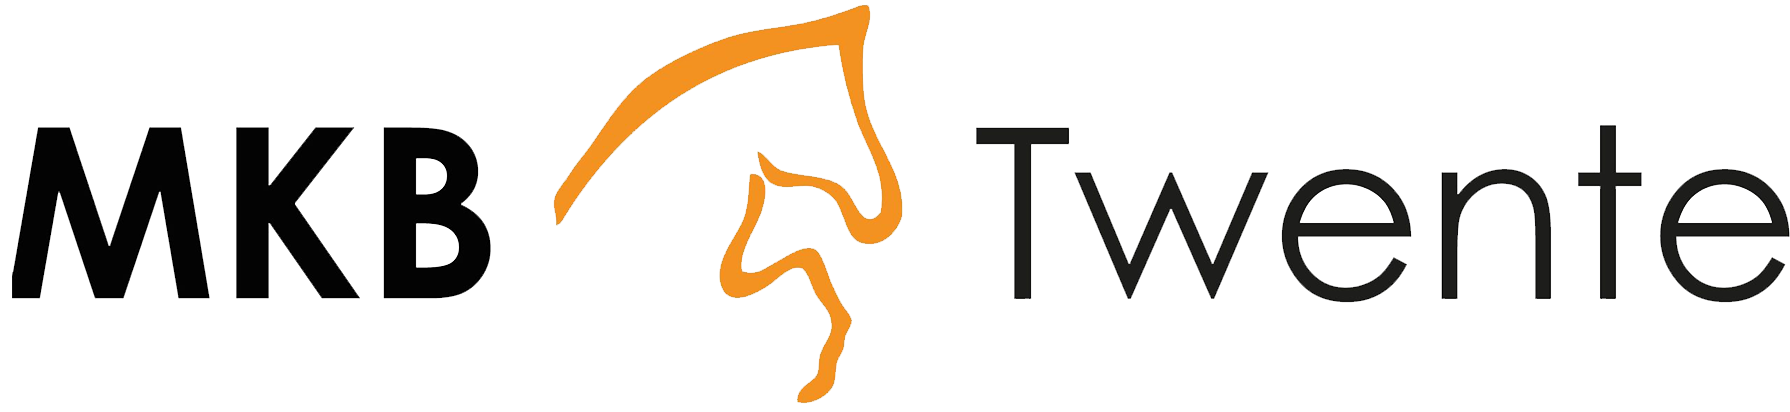 MKB Twente Logo - Arcade Bouw Consult